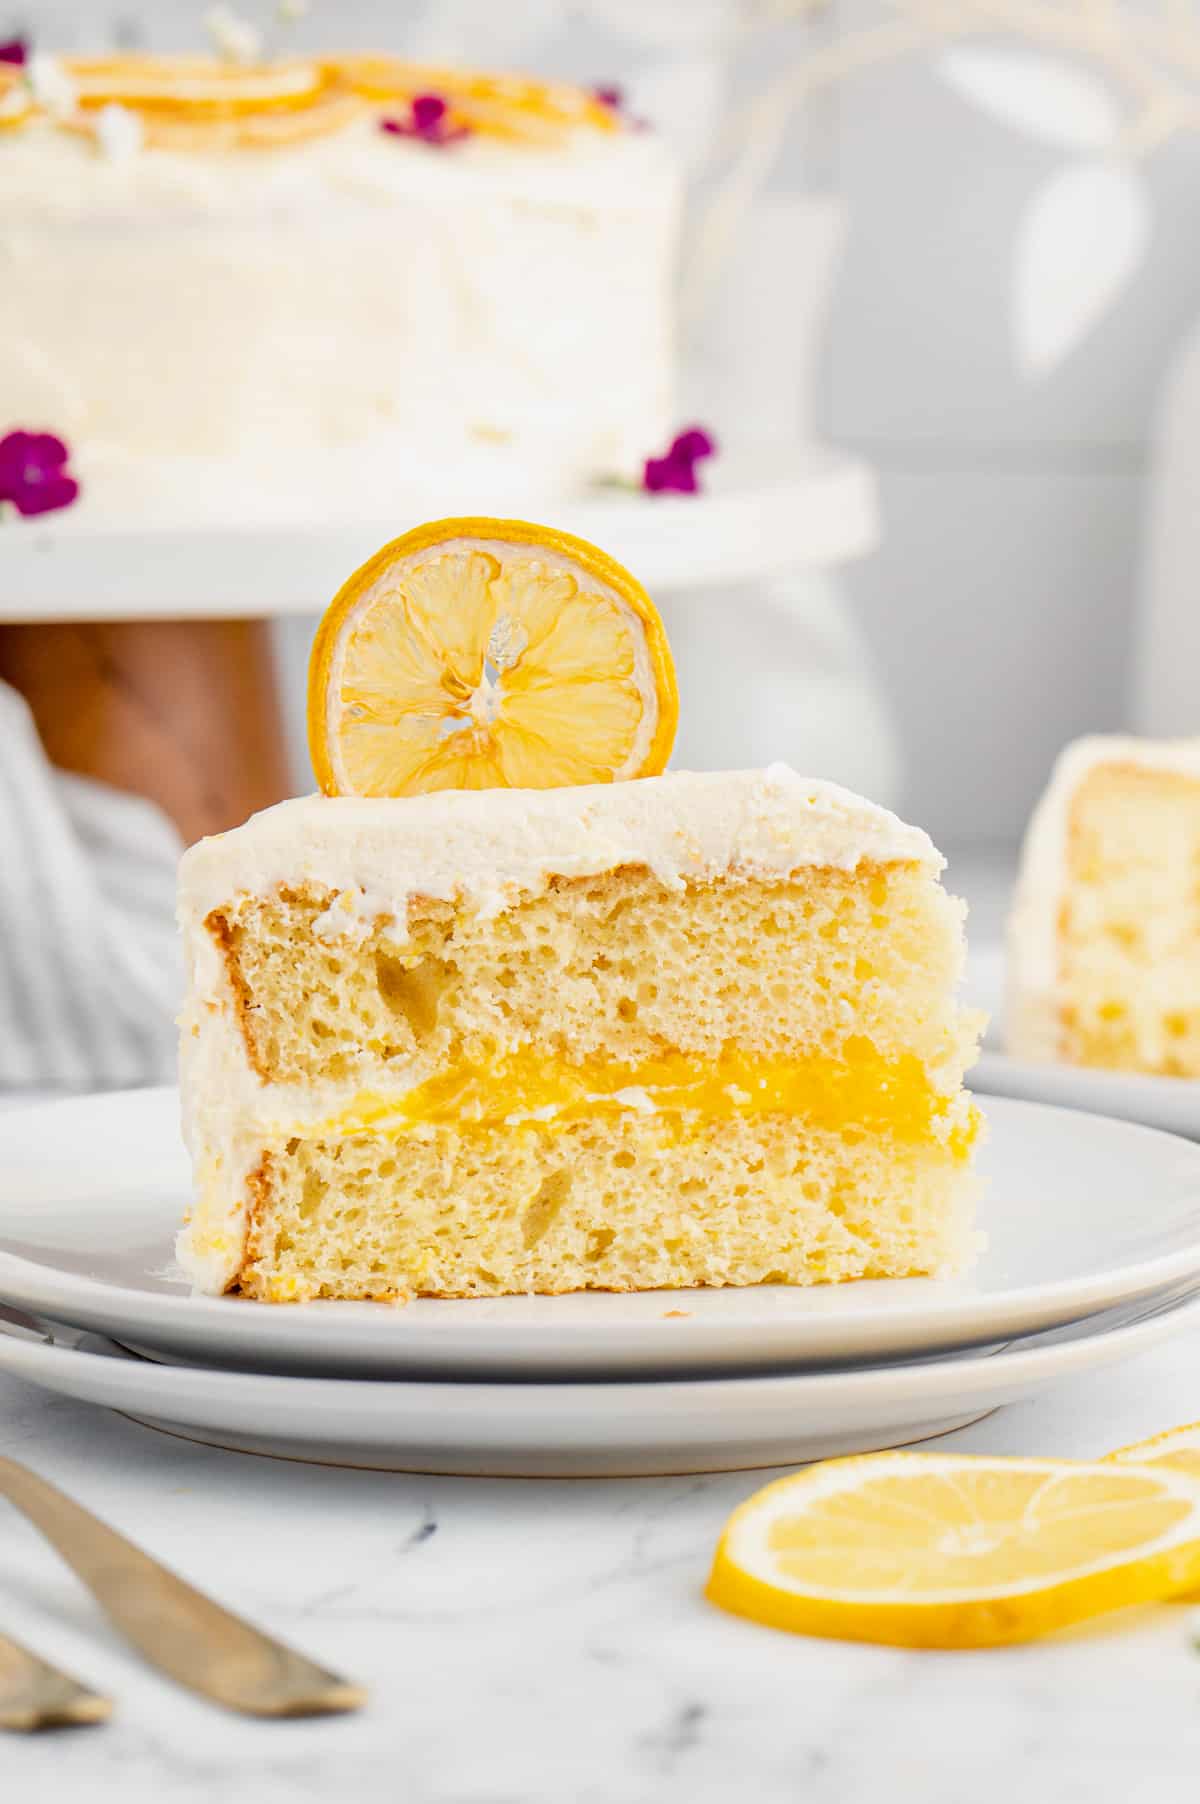 Lemon layered cake with lemon curd filling and lemon frosting.